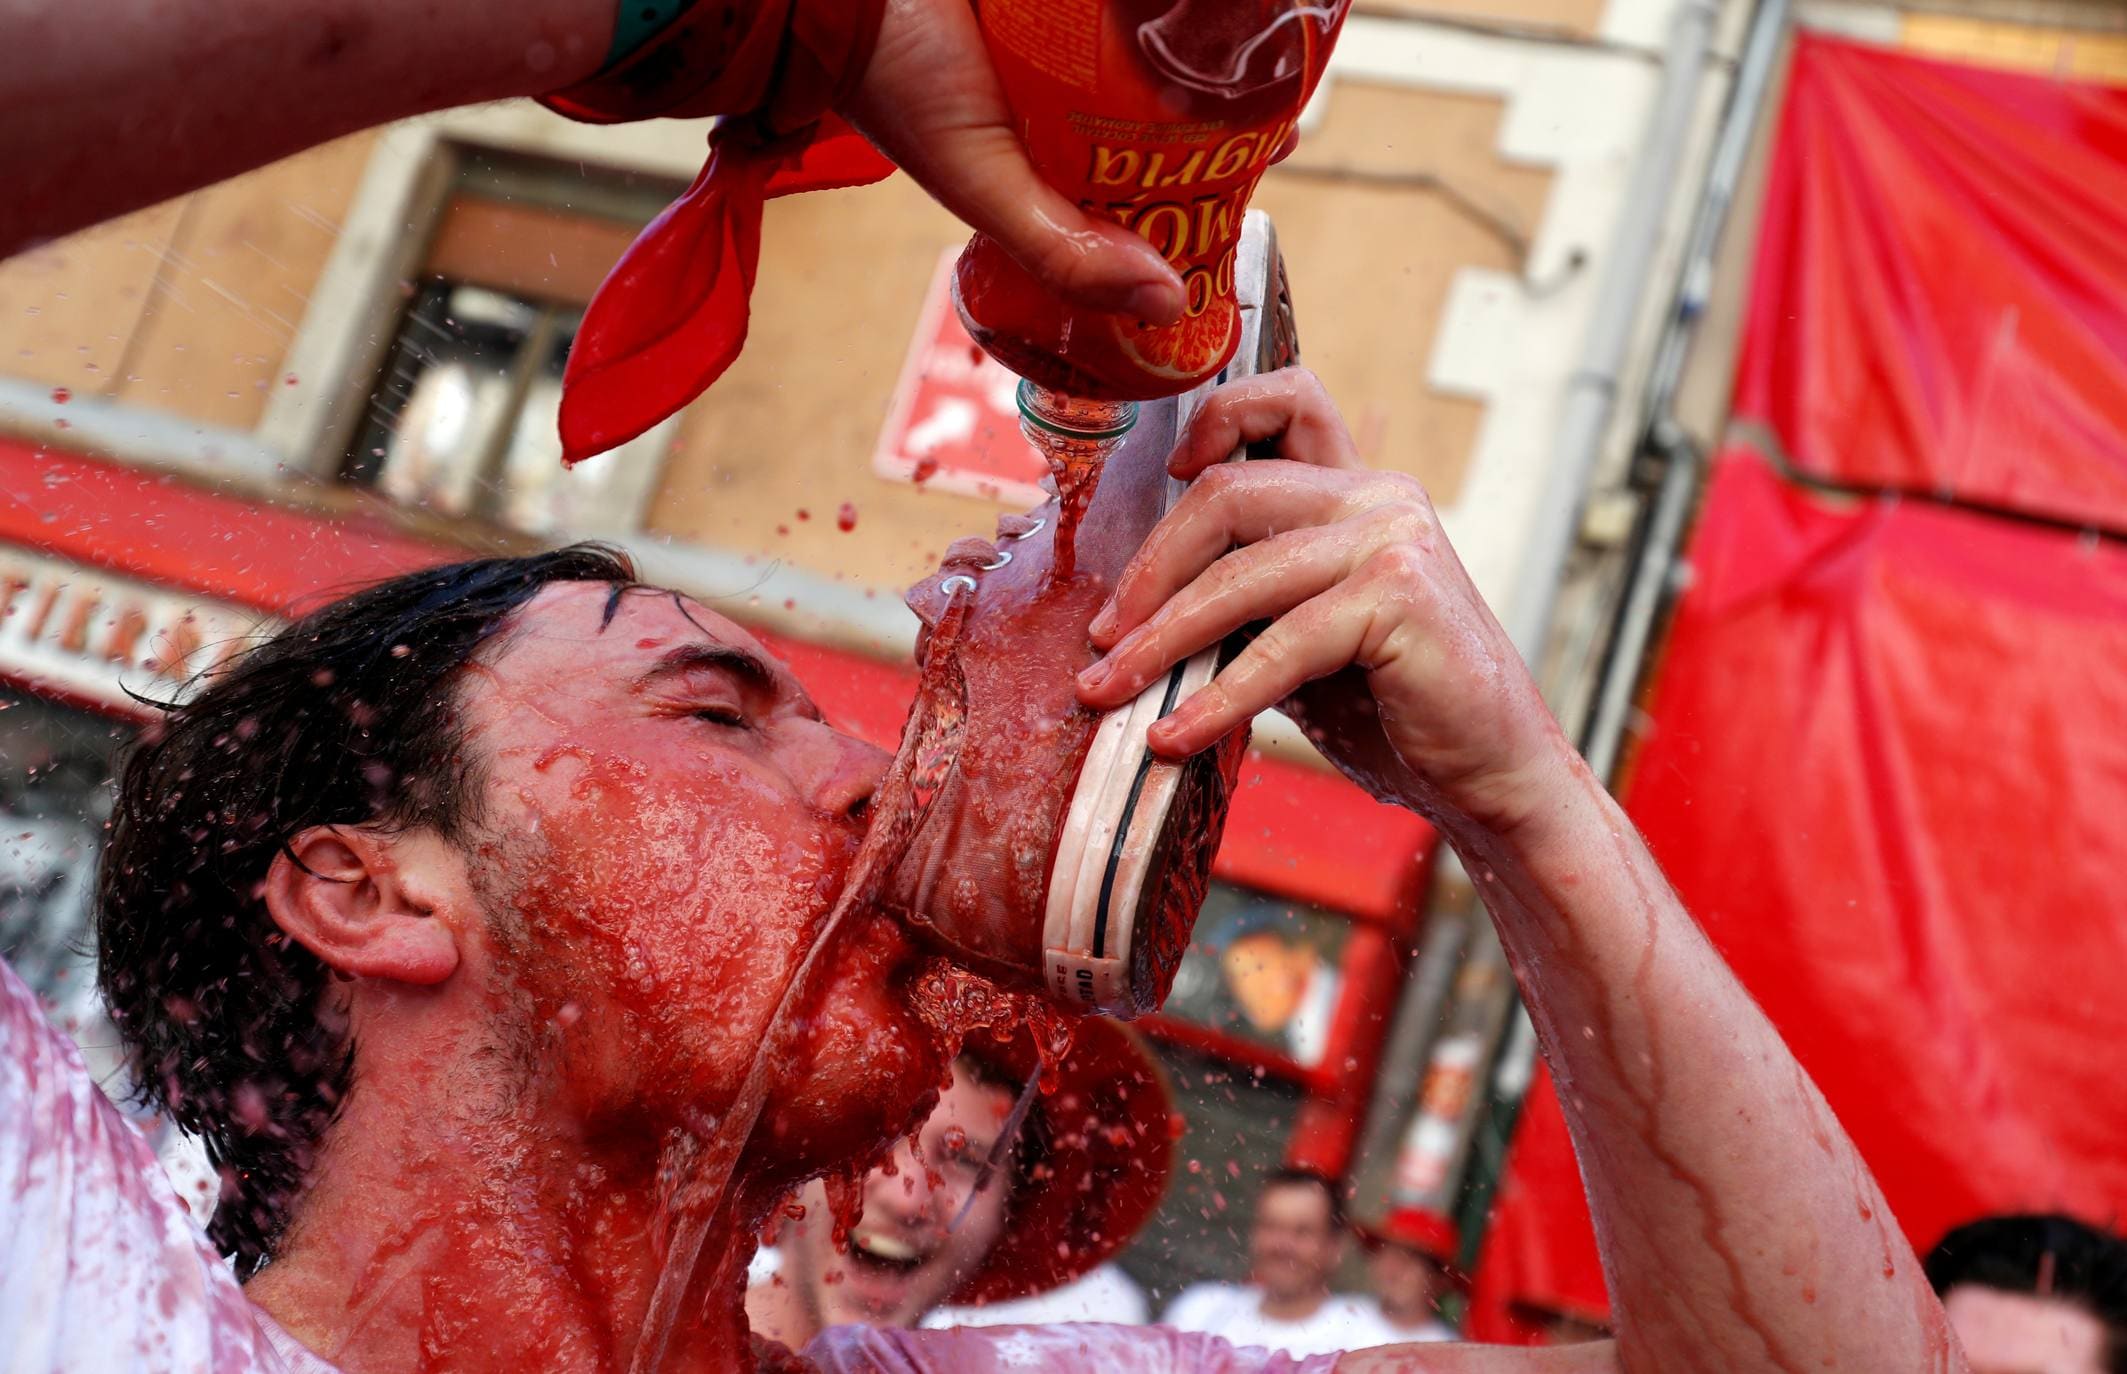 Fotos: Pamplona dispara la fiesta